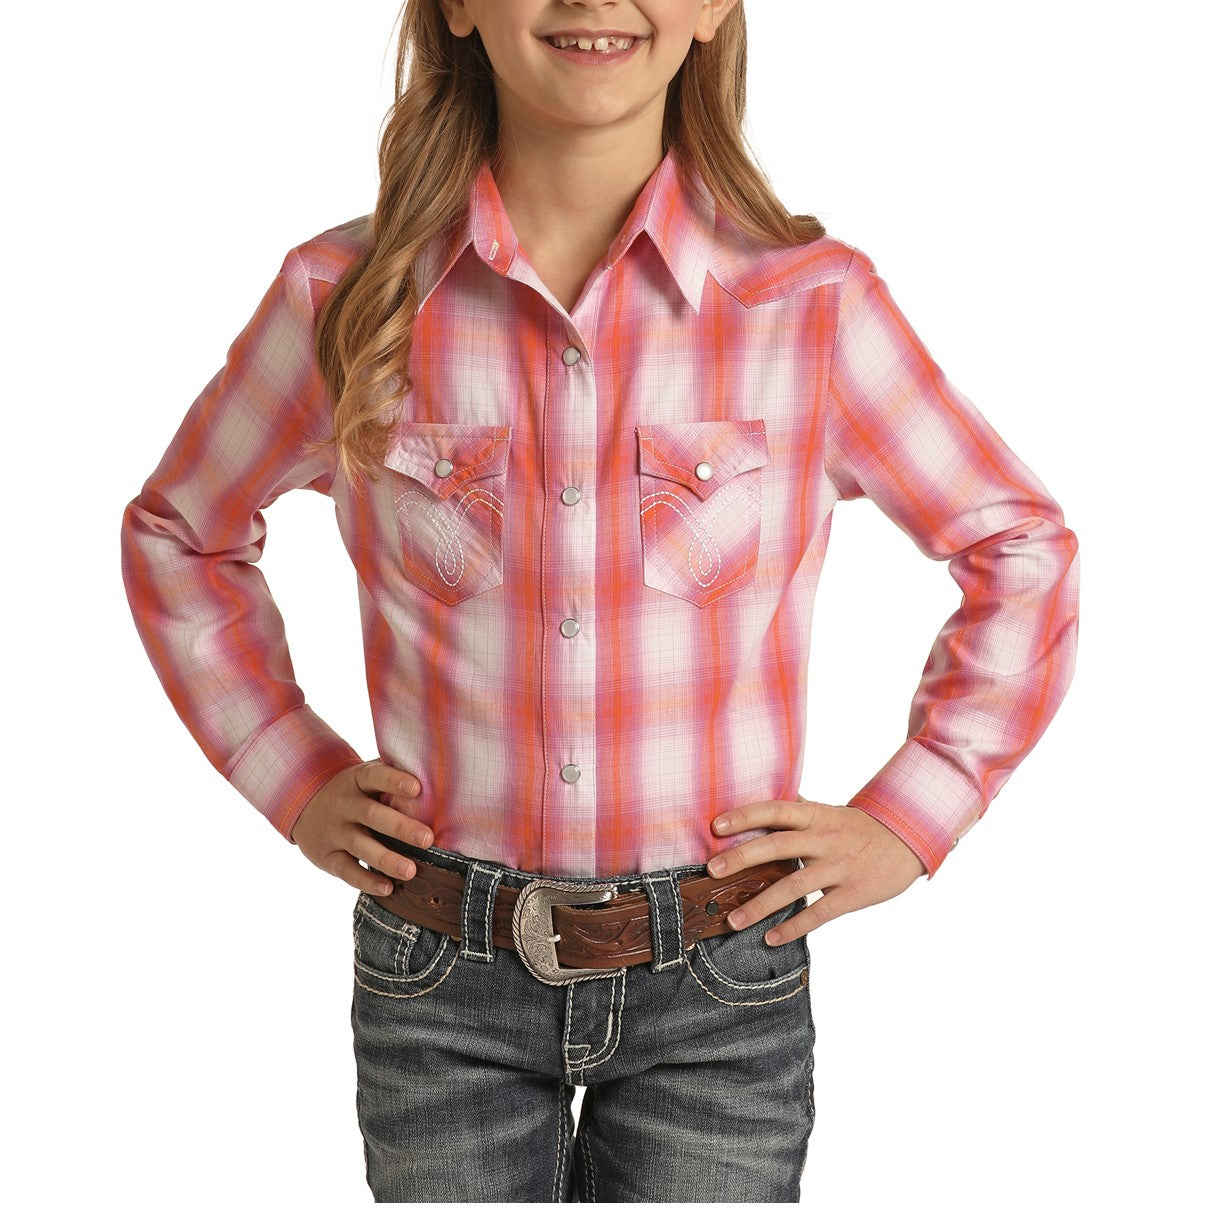 Panhandle Girl's Hot Pink Ombre Plaid Snap Shirt C6S1945-67